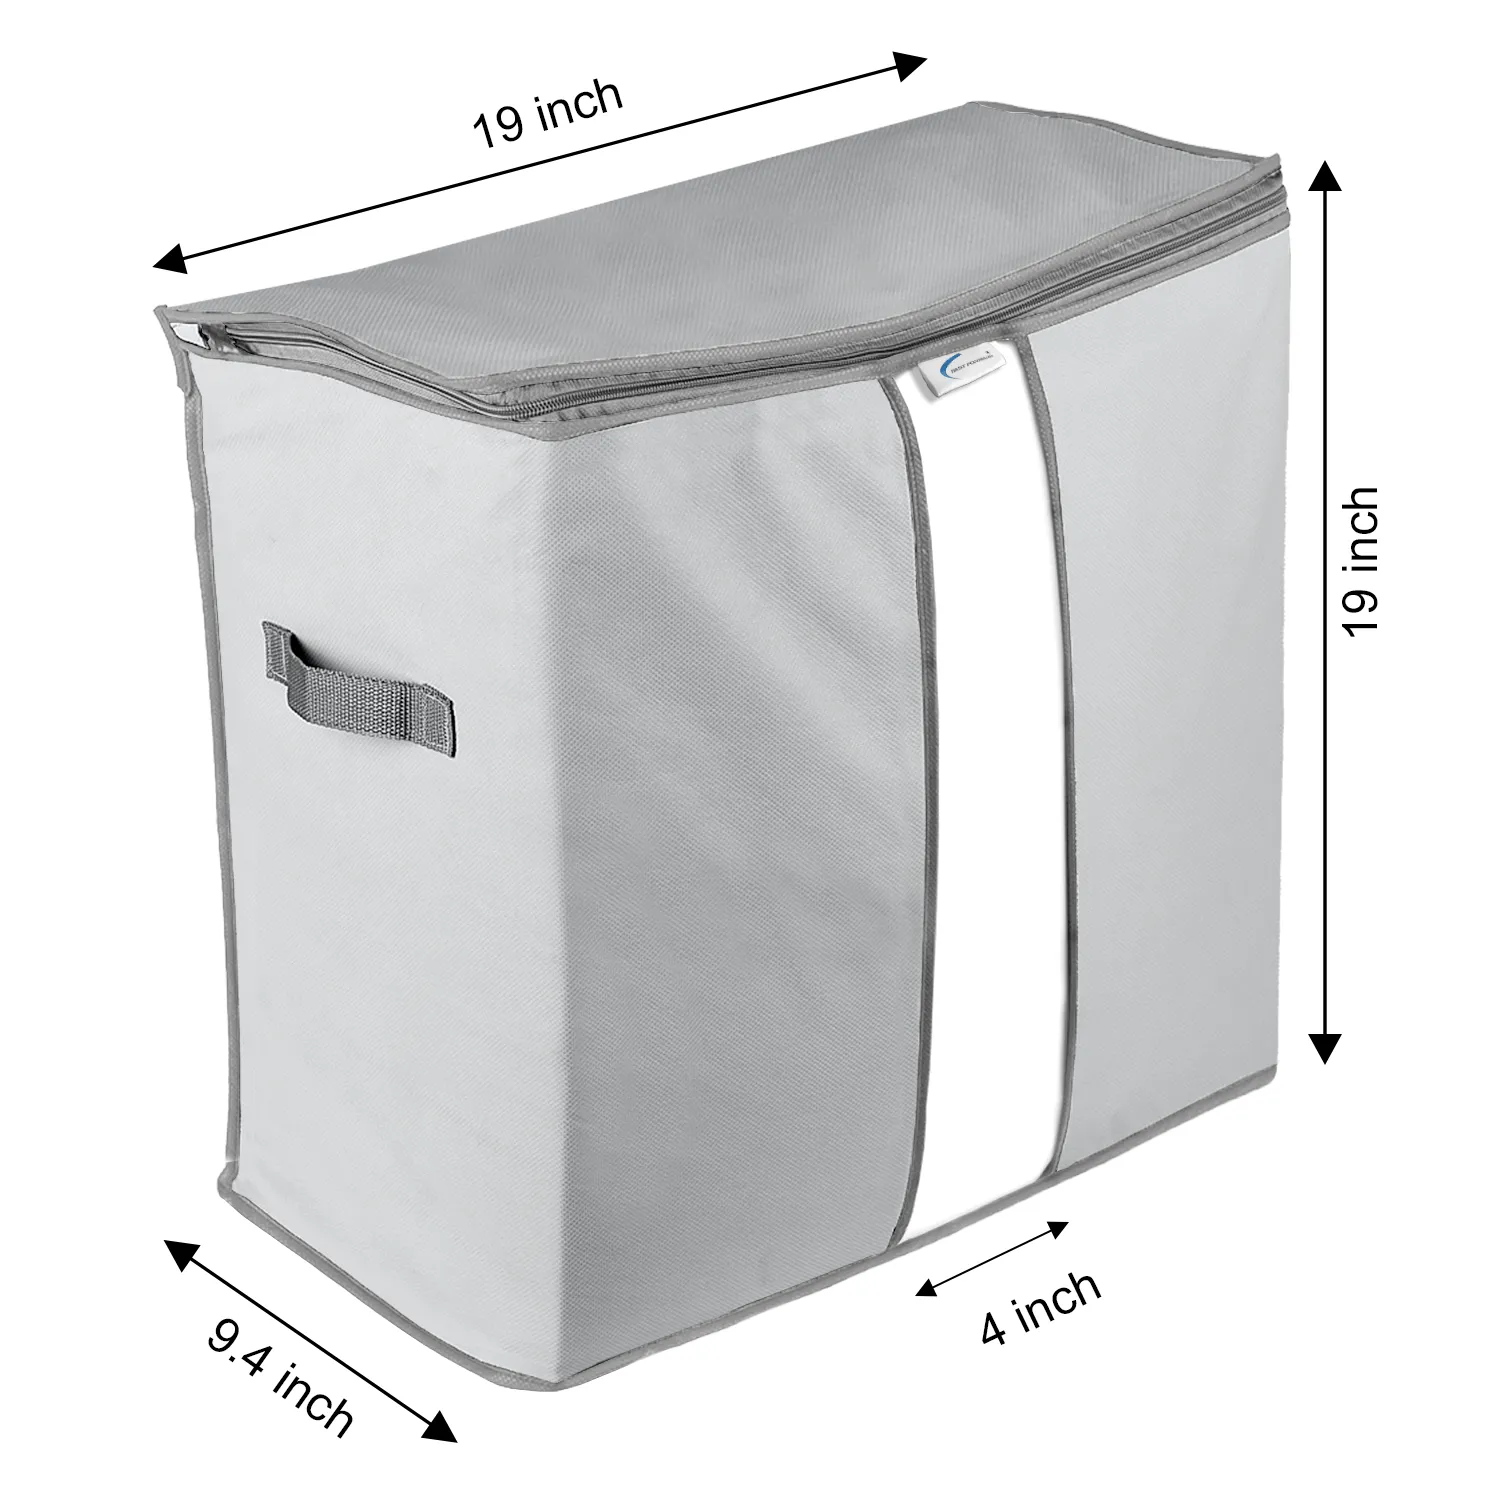 Fast Forward Efficient Wardrobe Solutions Large Foldable Cloth Storage Bag